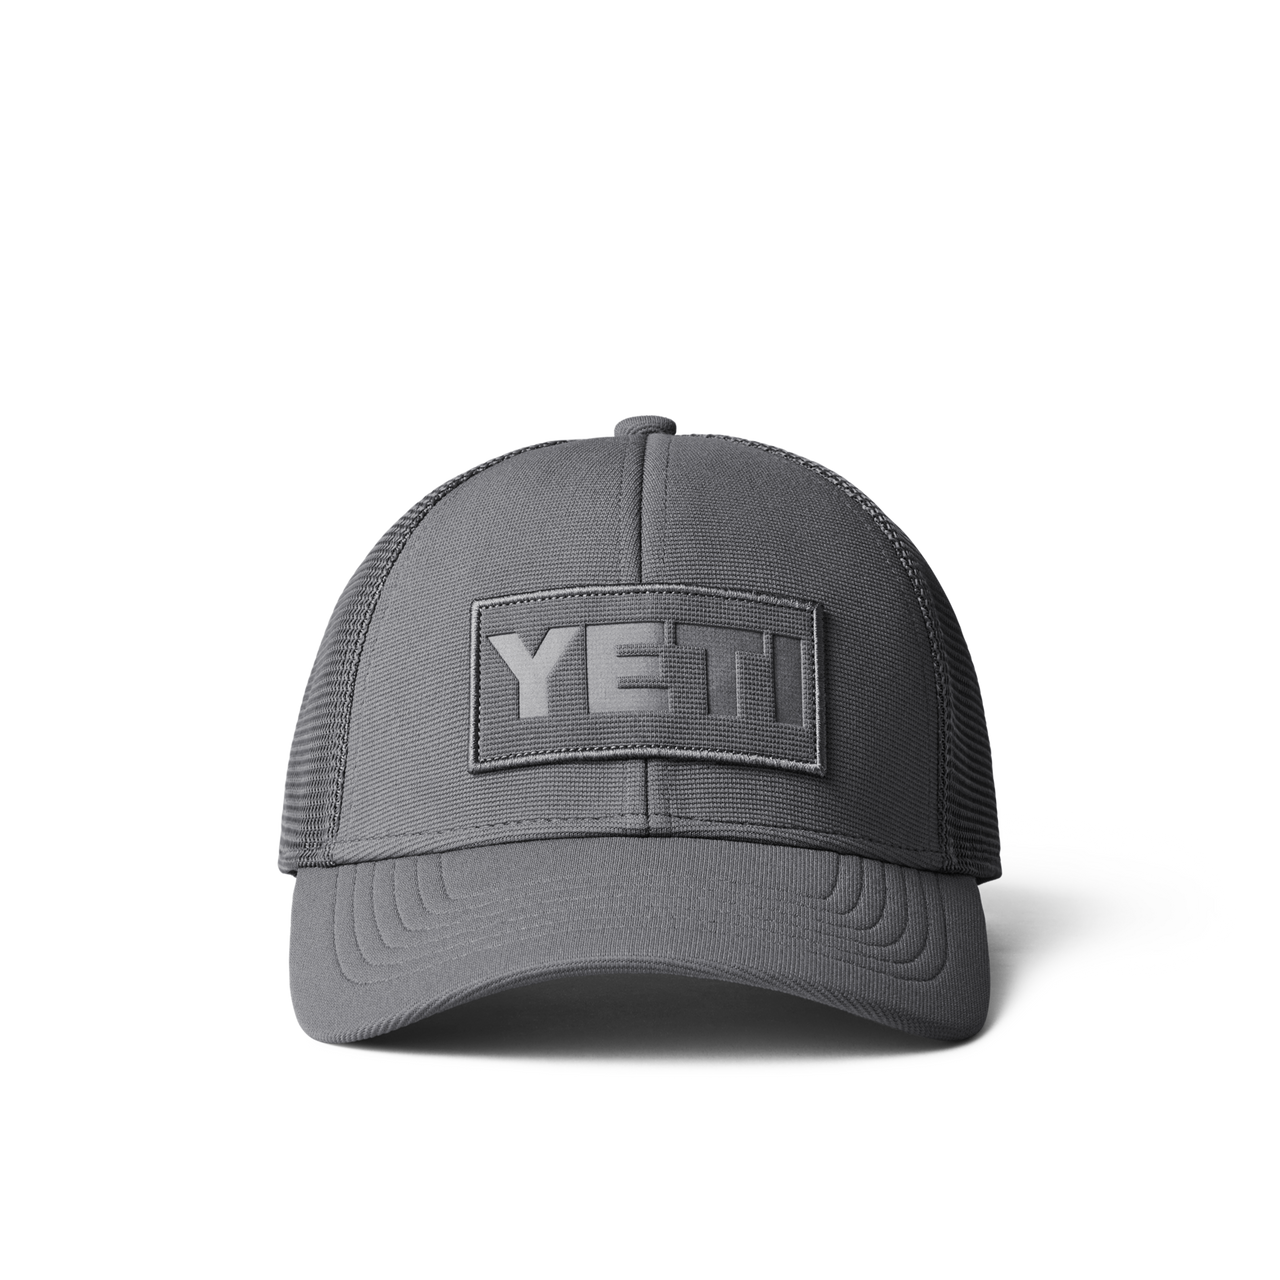 Yeti Patch Trucker Hat - Grey